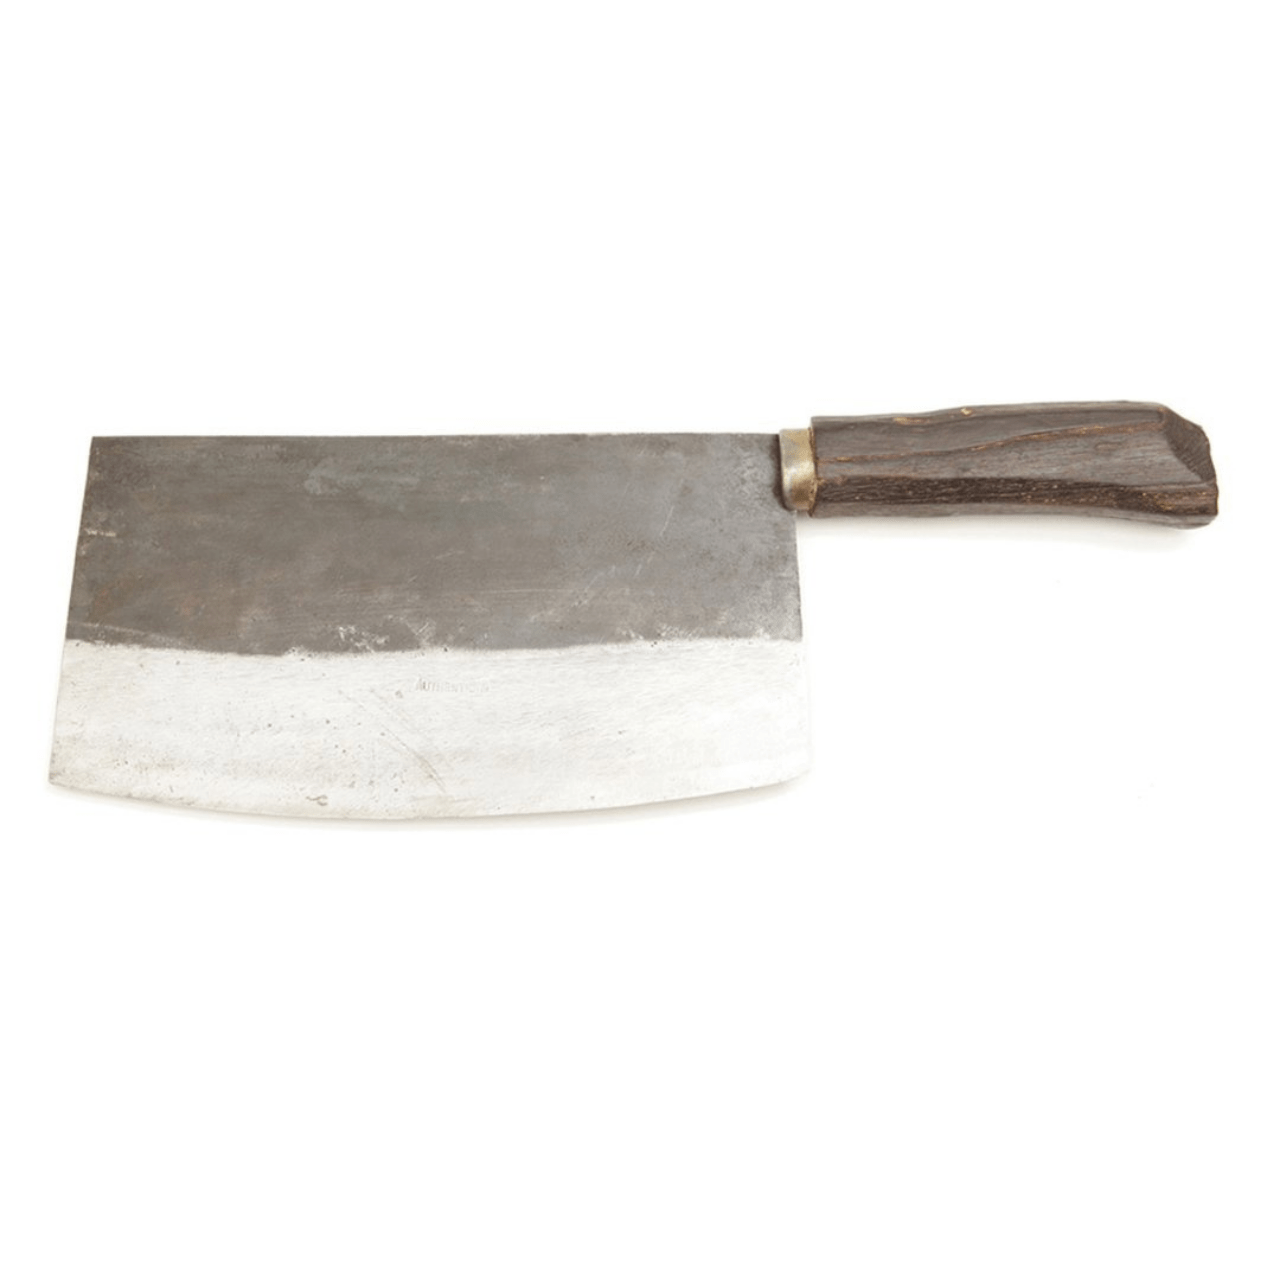 Authentic Blades Keukenmessen Hakmes 19cm | Kho Khan